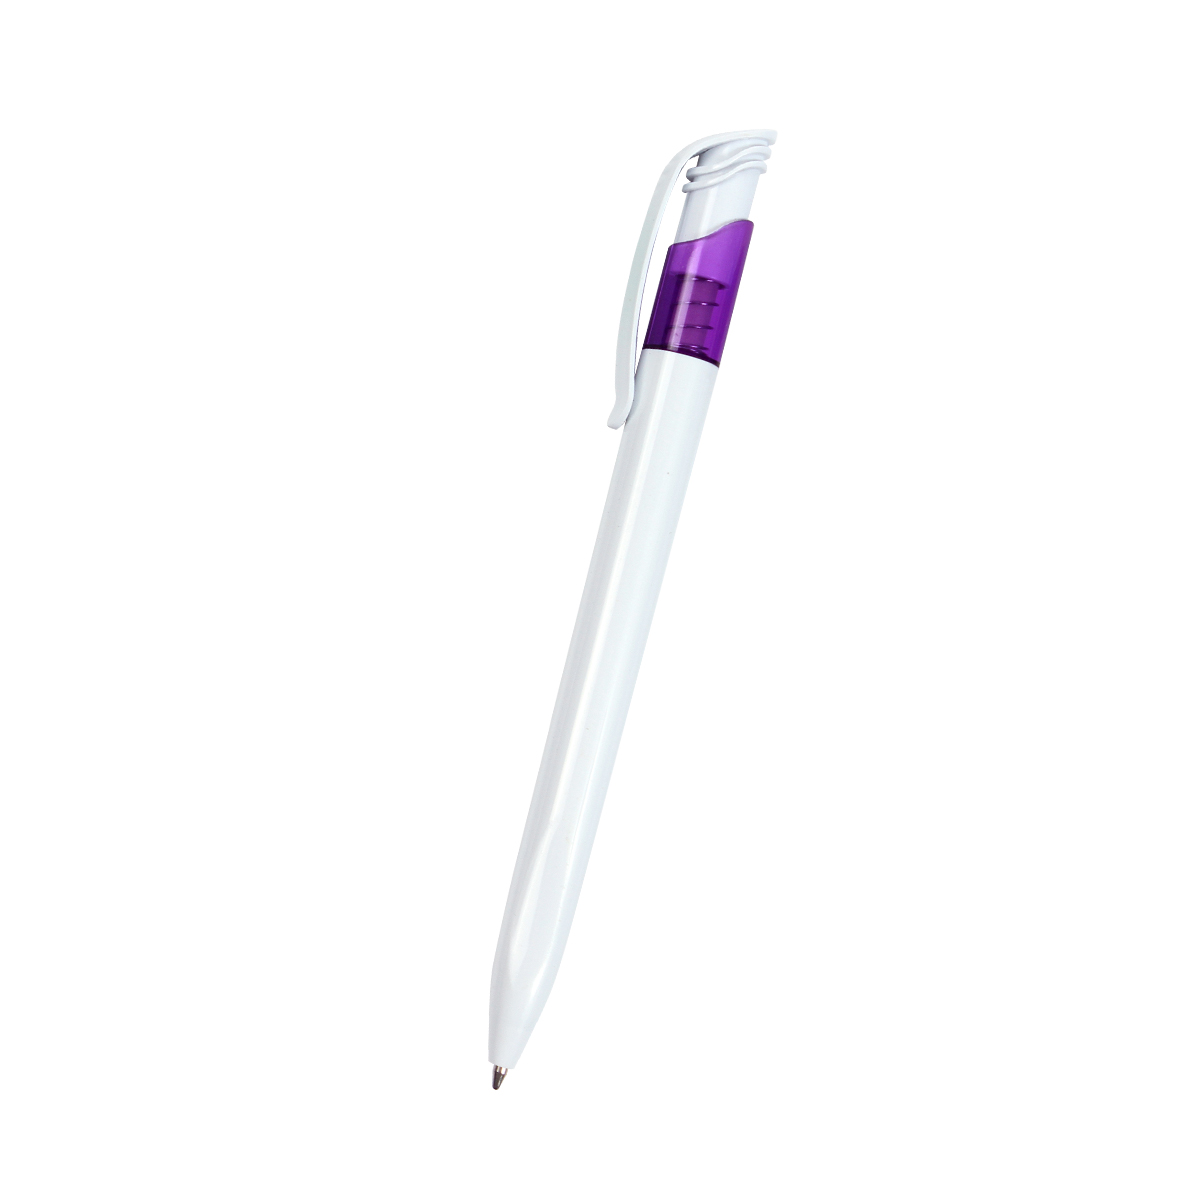 Bolígrafo o pluma de plástico Epal retráctil con goma de borrar  promocionales, BP 8030